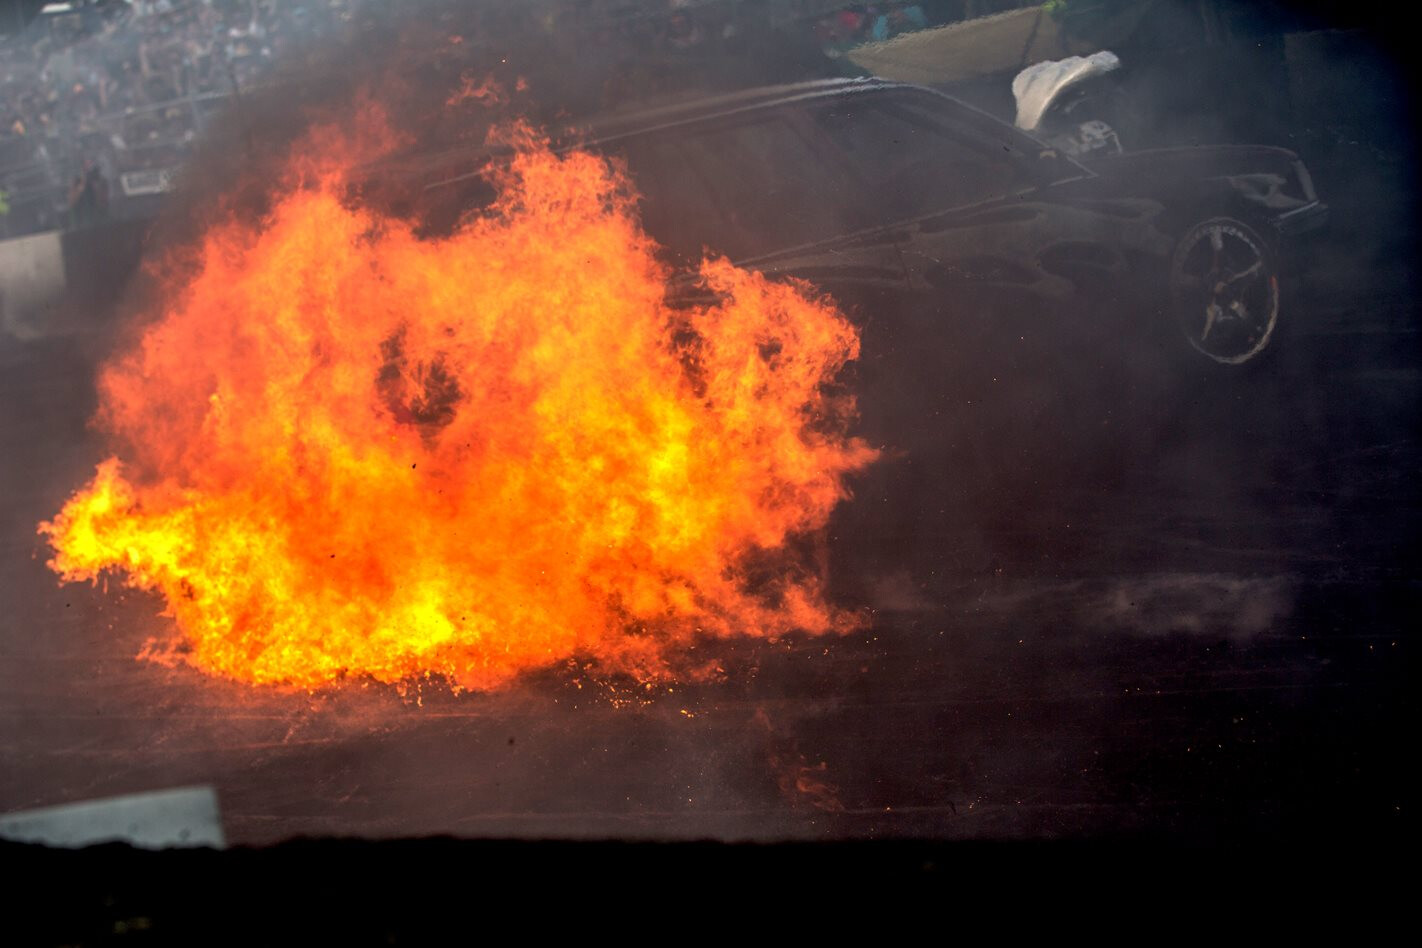 TUFFST’S MASSIVE SUMMERNATS 30 BURNOUT FIRE – VIDEO